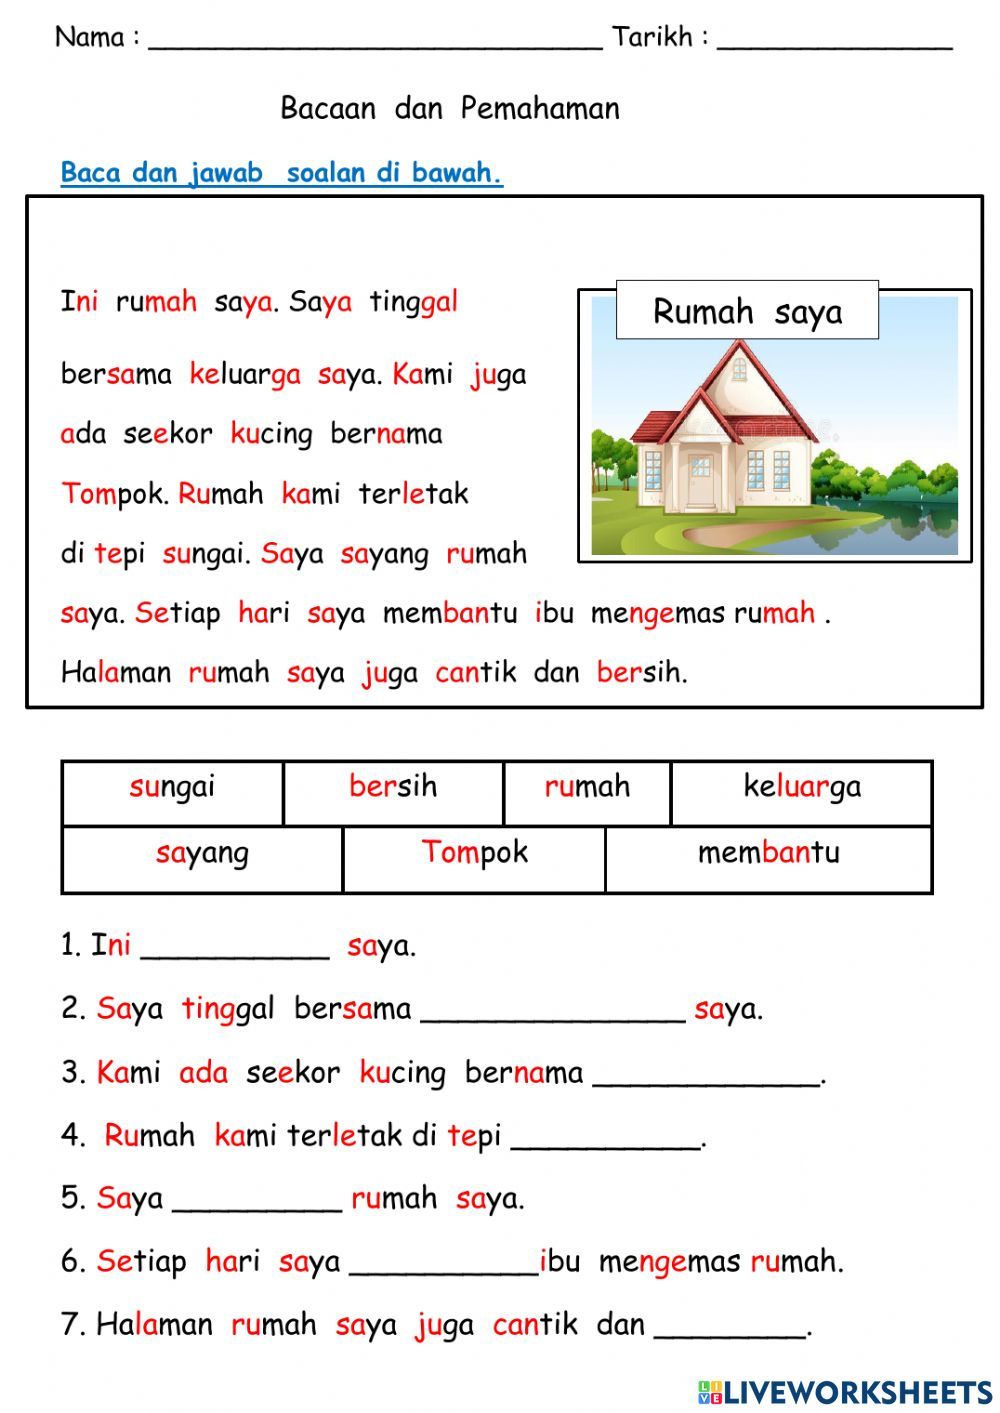 Bacaan dan Pemahaman Bahasa Melayu (BM) exercise